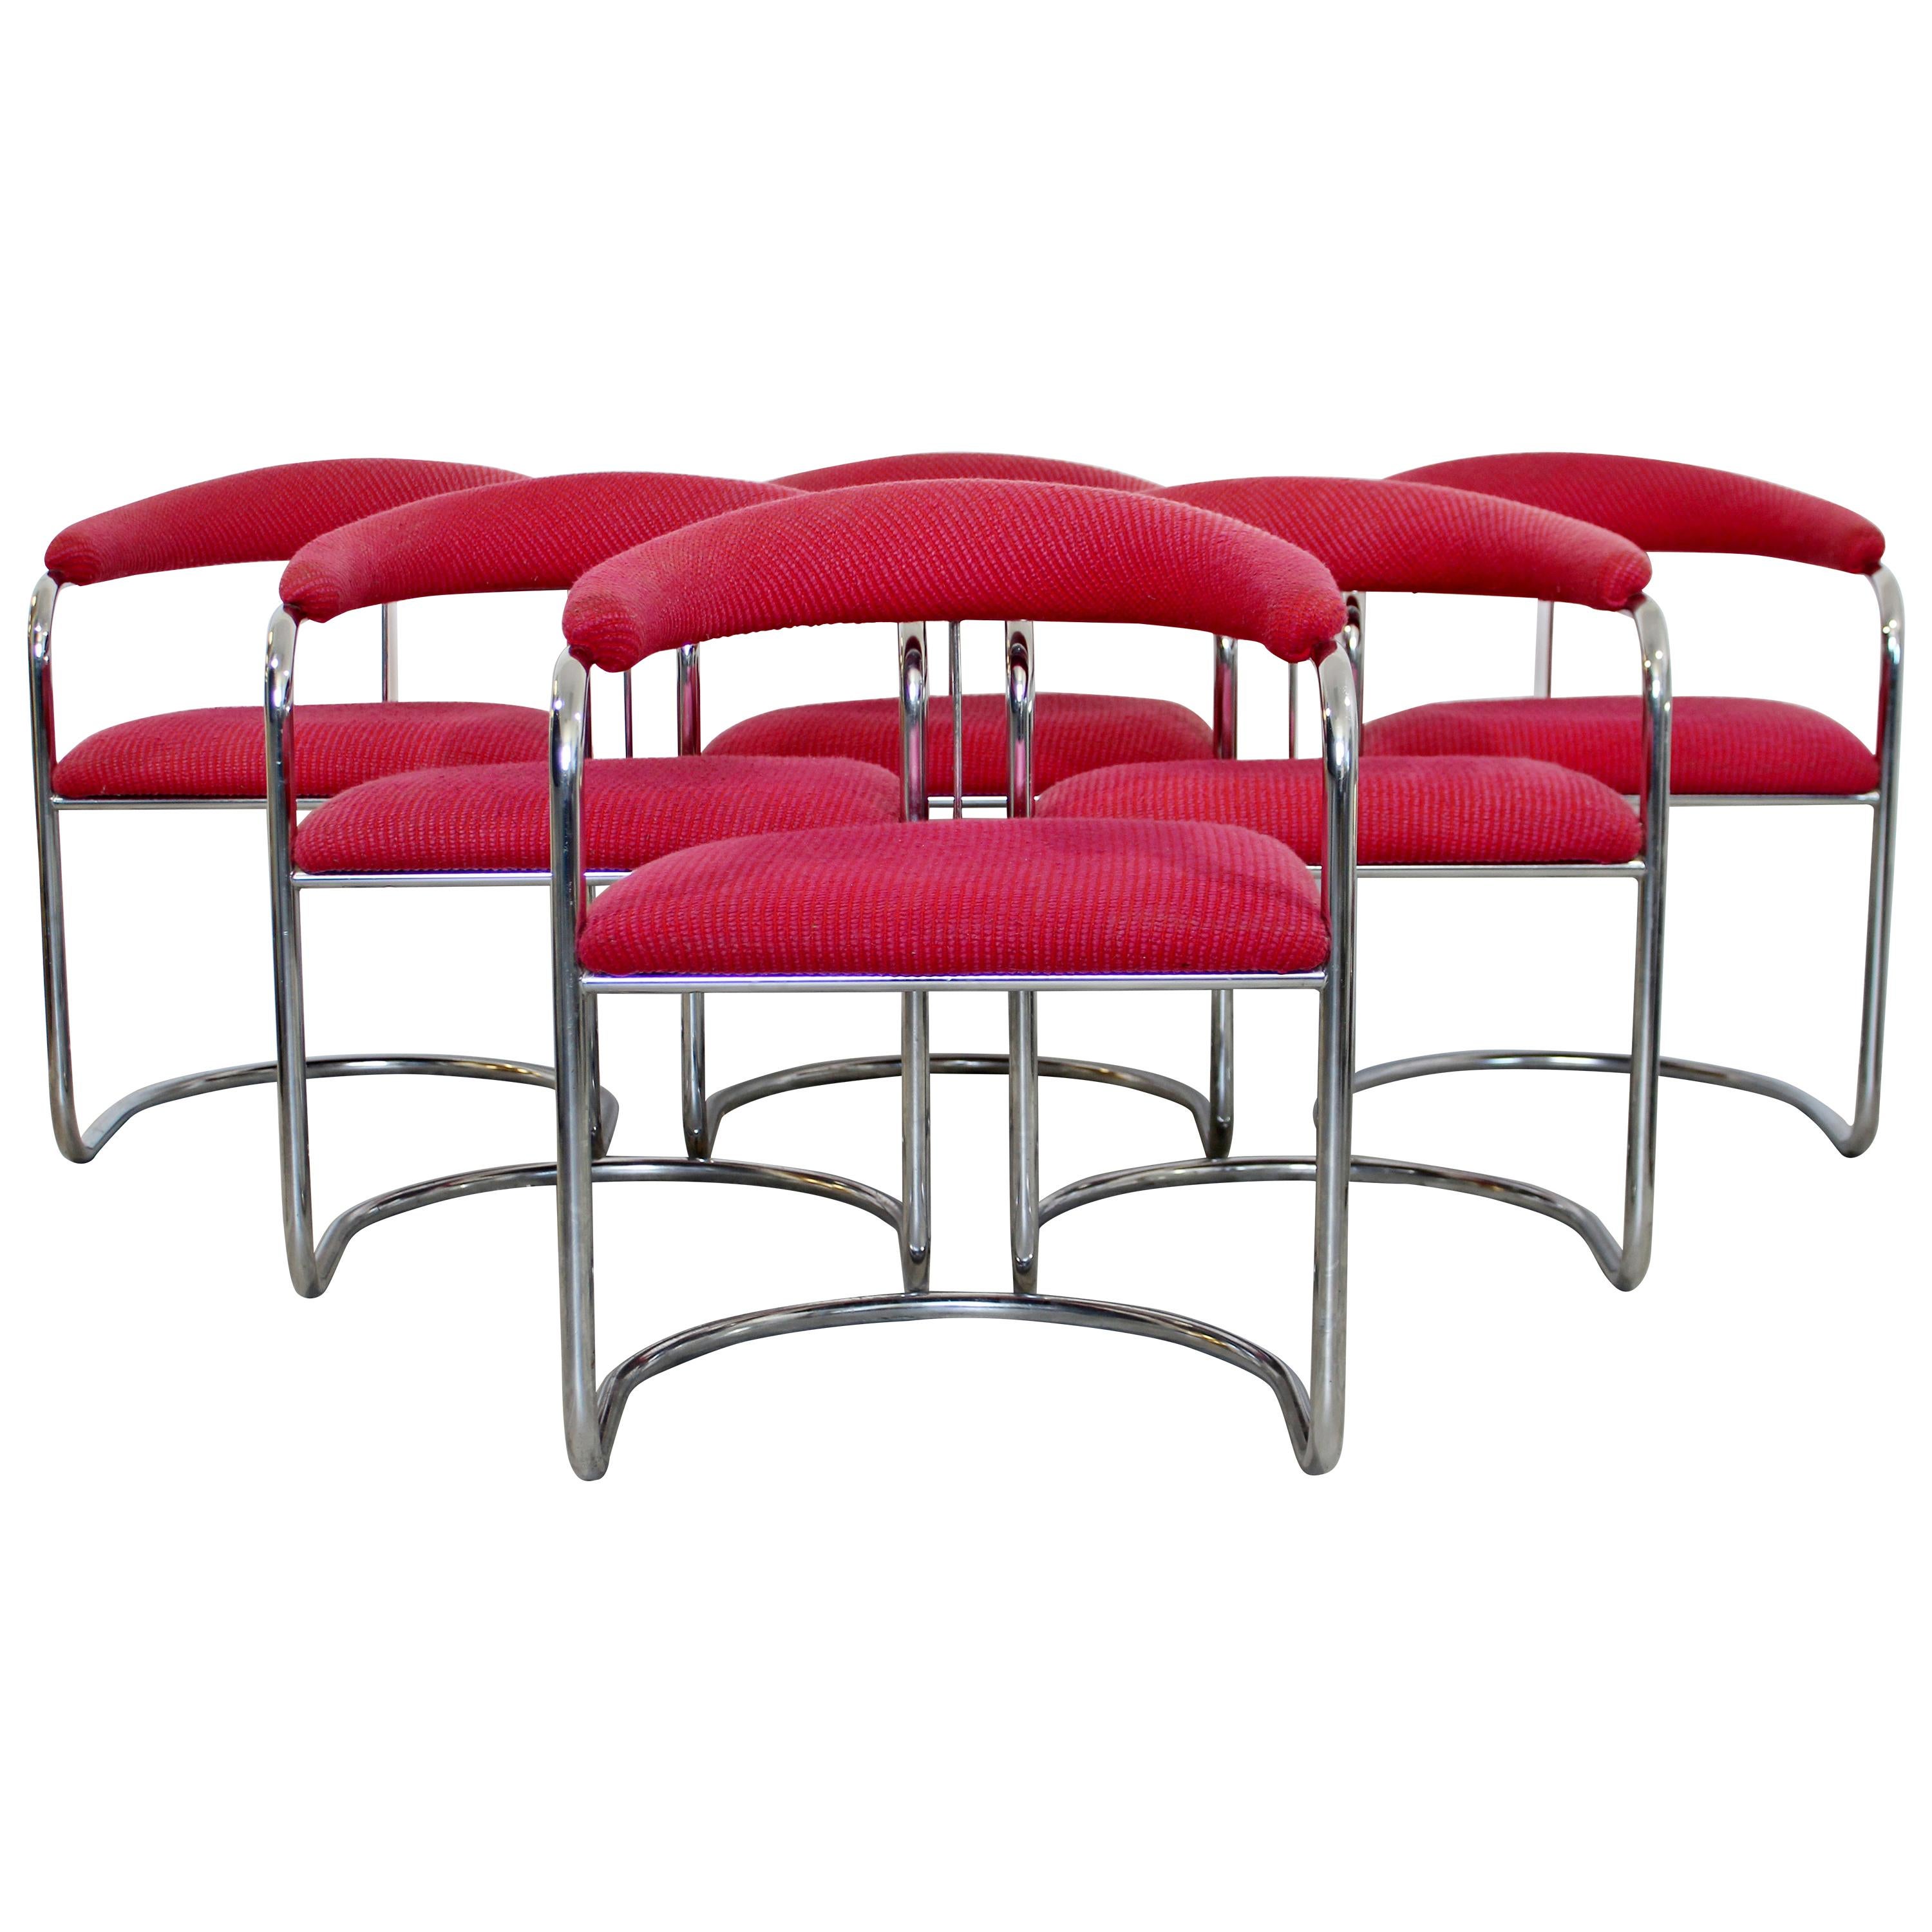 Mid-Century Modern Anton Lorenz Thonet Set of 6 Barrel Chrome Dining Chairs